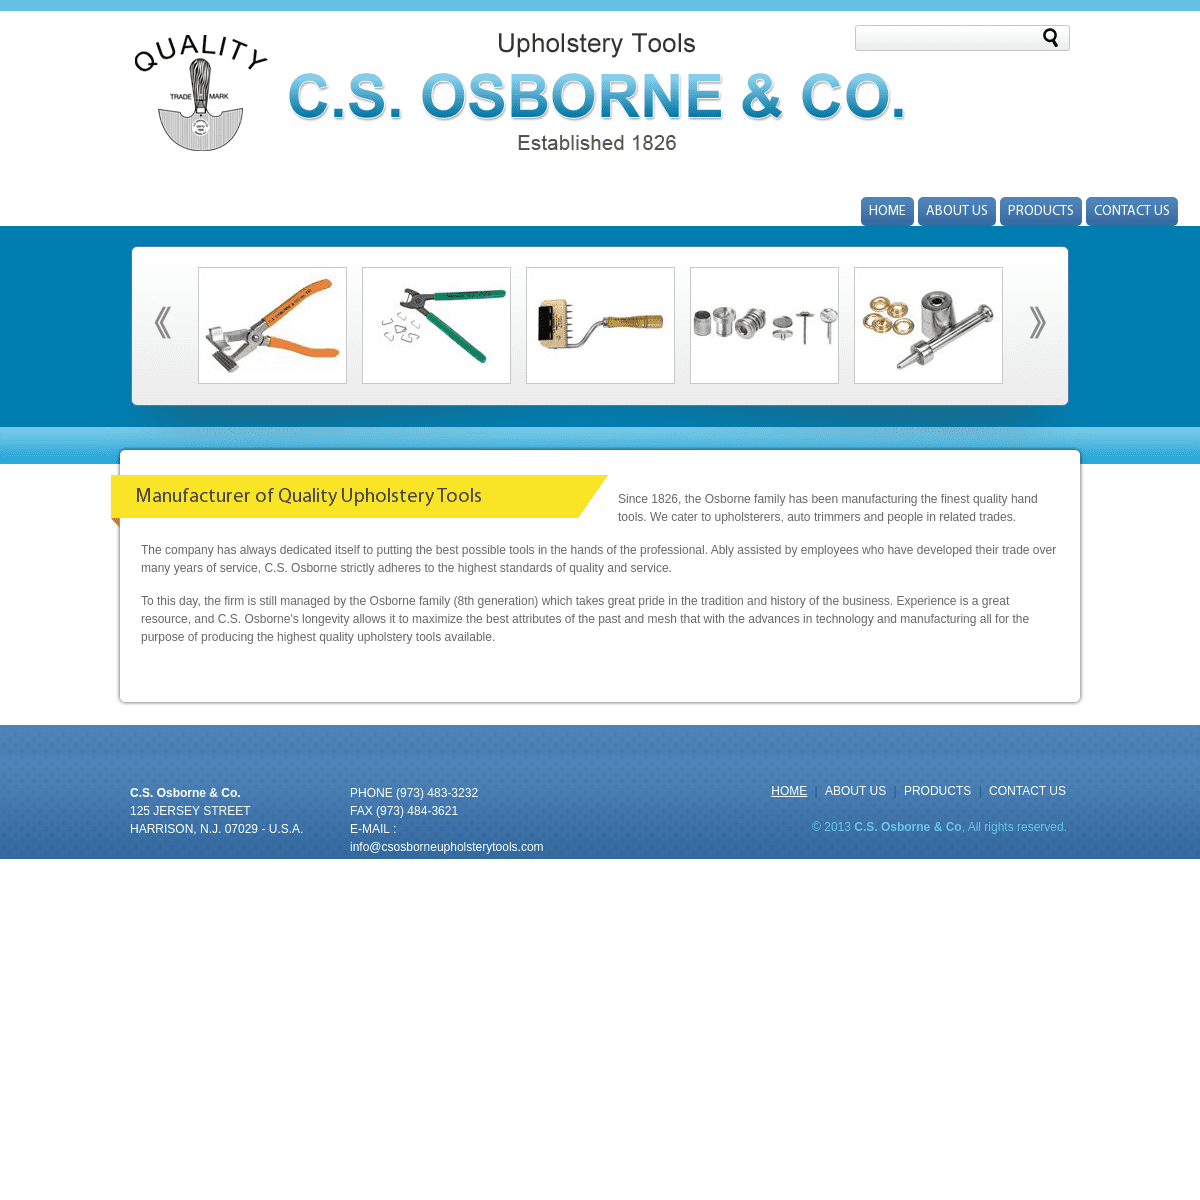 A complete backup of csosborneupholsterytools.com